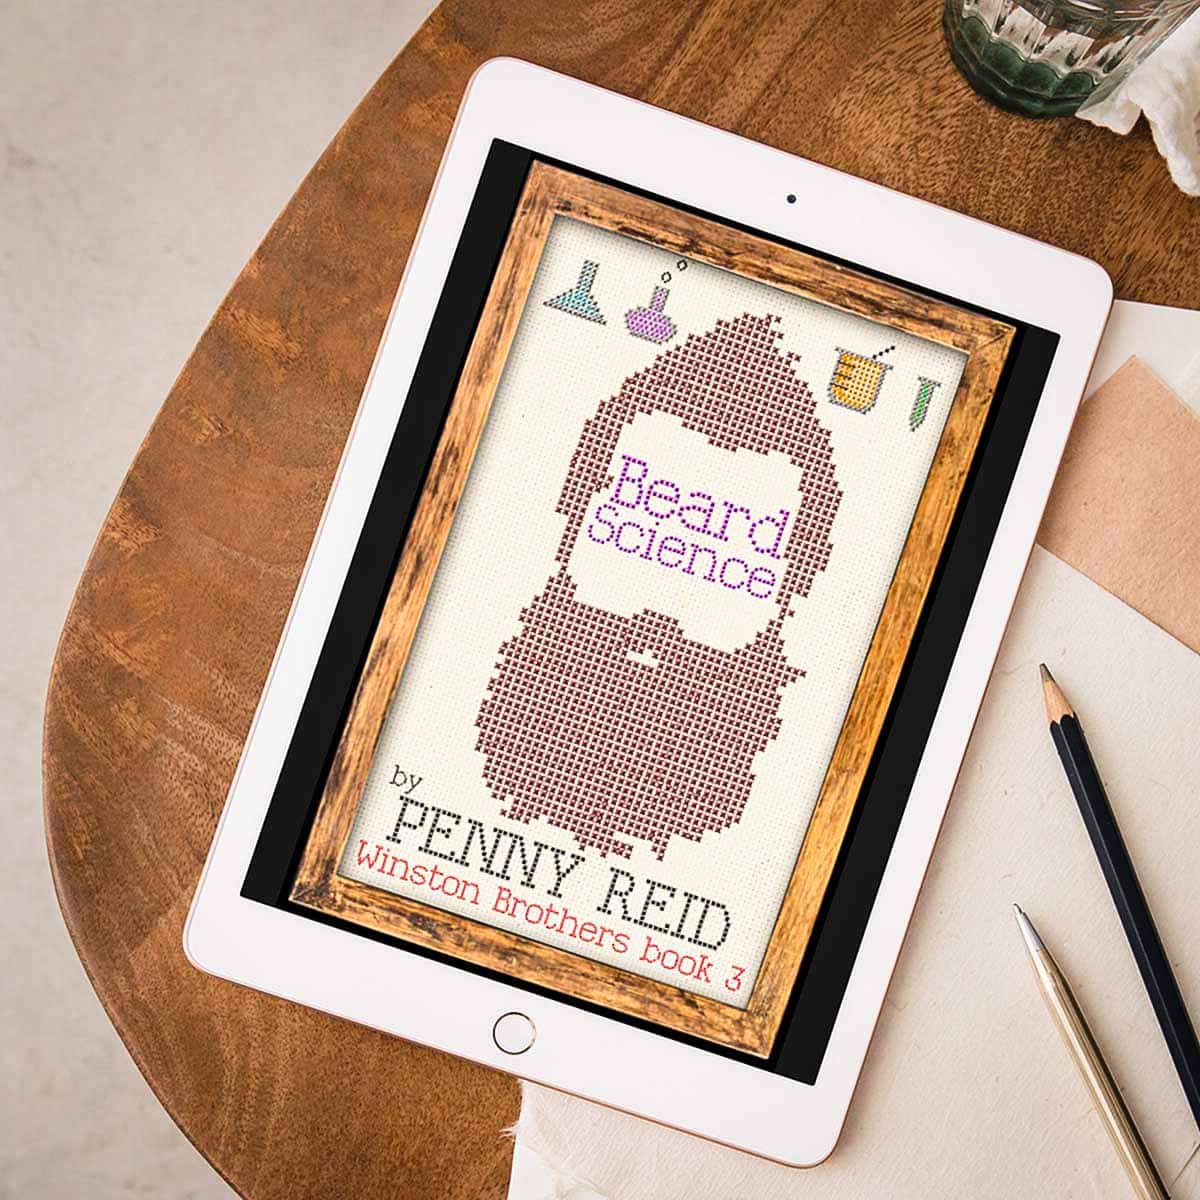 Beard Science by Penny Reid – Winston Brothers Book 3